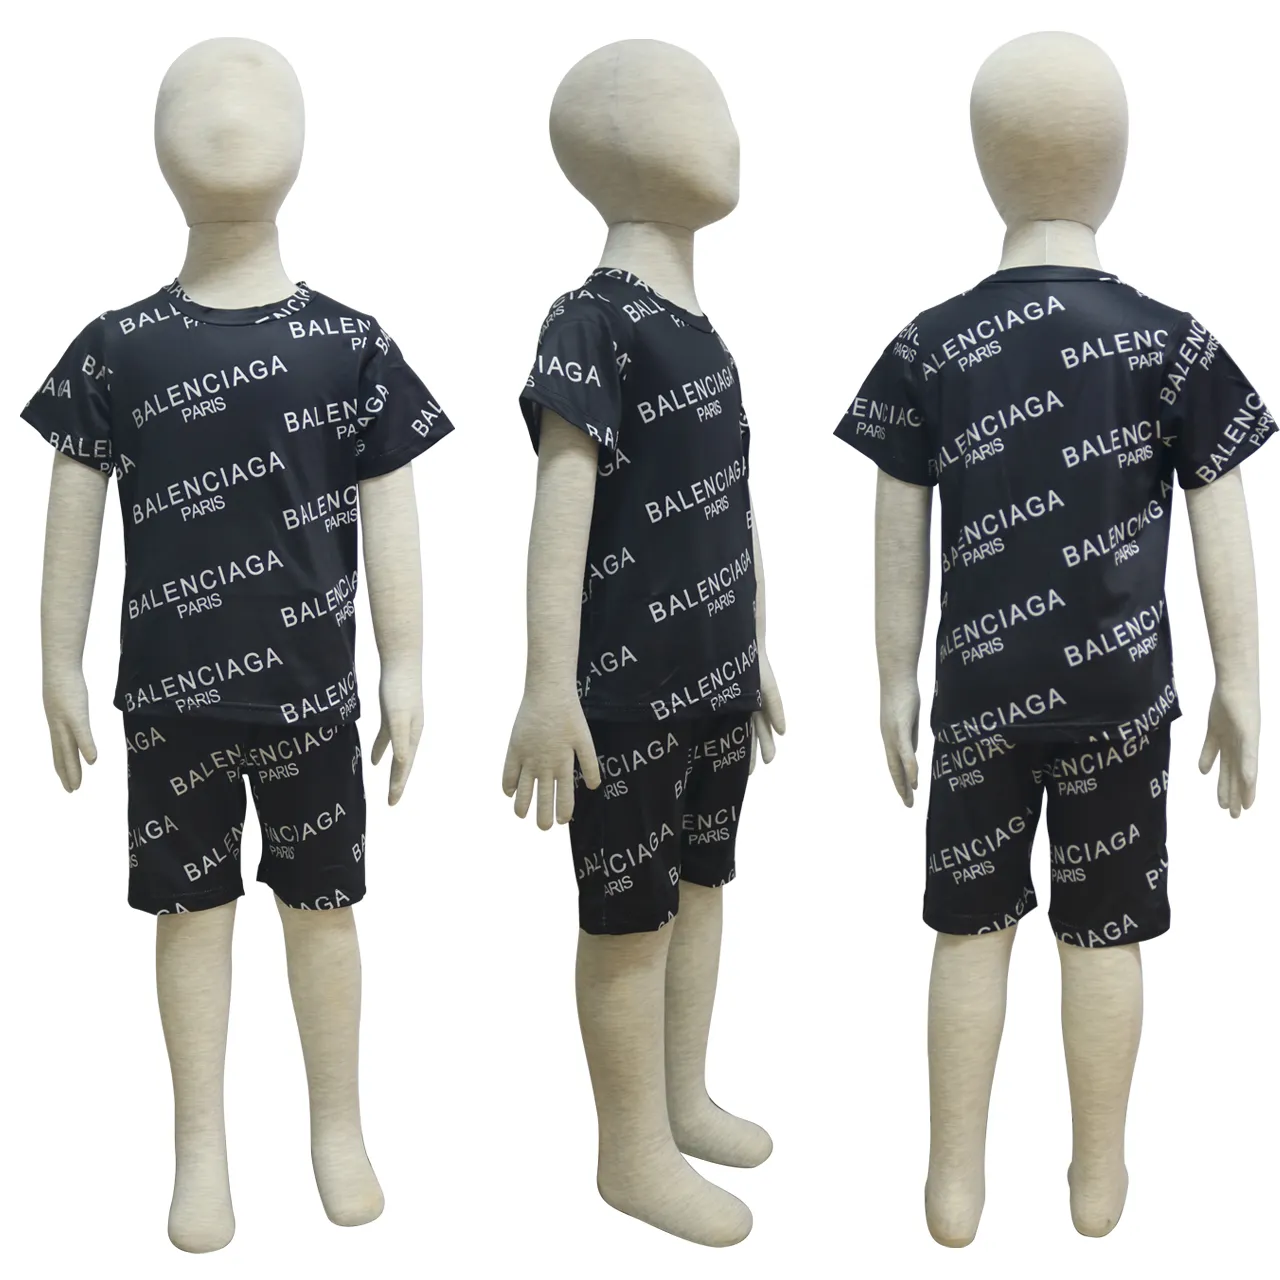 Toddler Boy Summer Clothing Set Fashion Boys Short Sleeves Hip hop Letter Print Outfit Set Black Red Blue for 2-6T